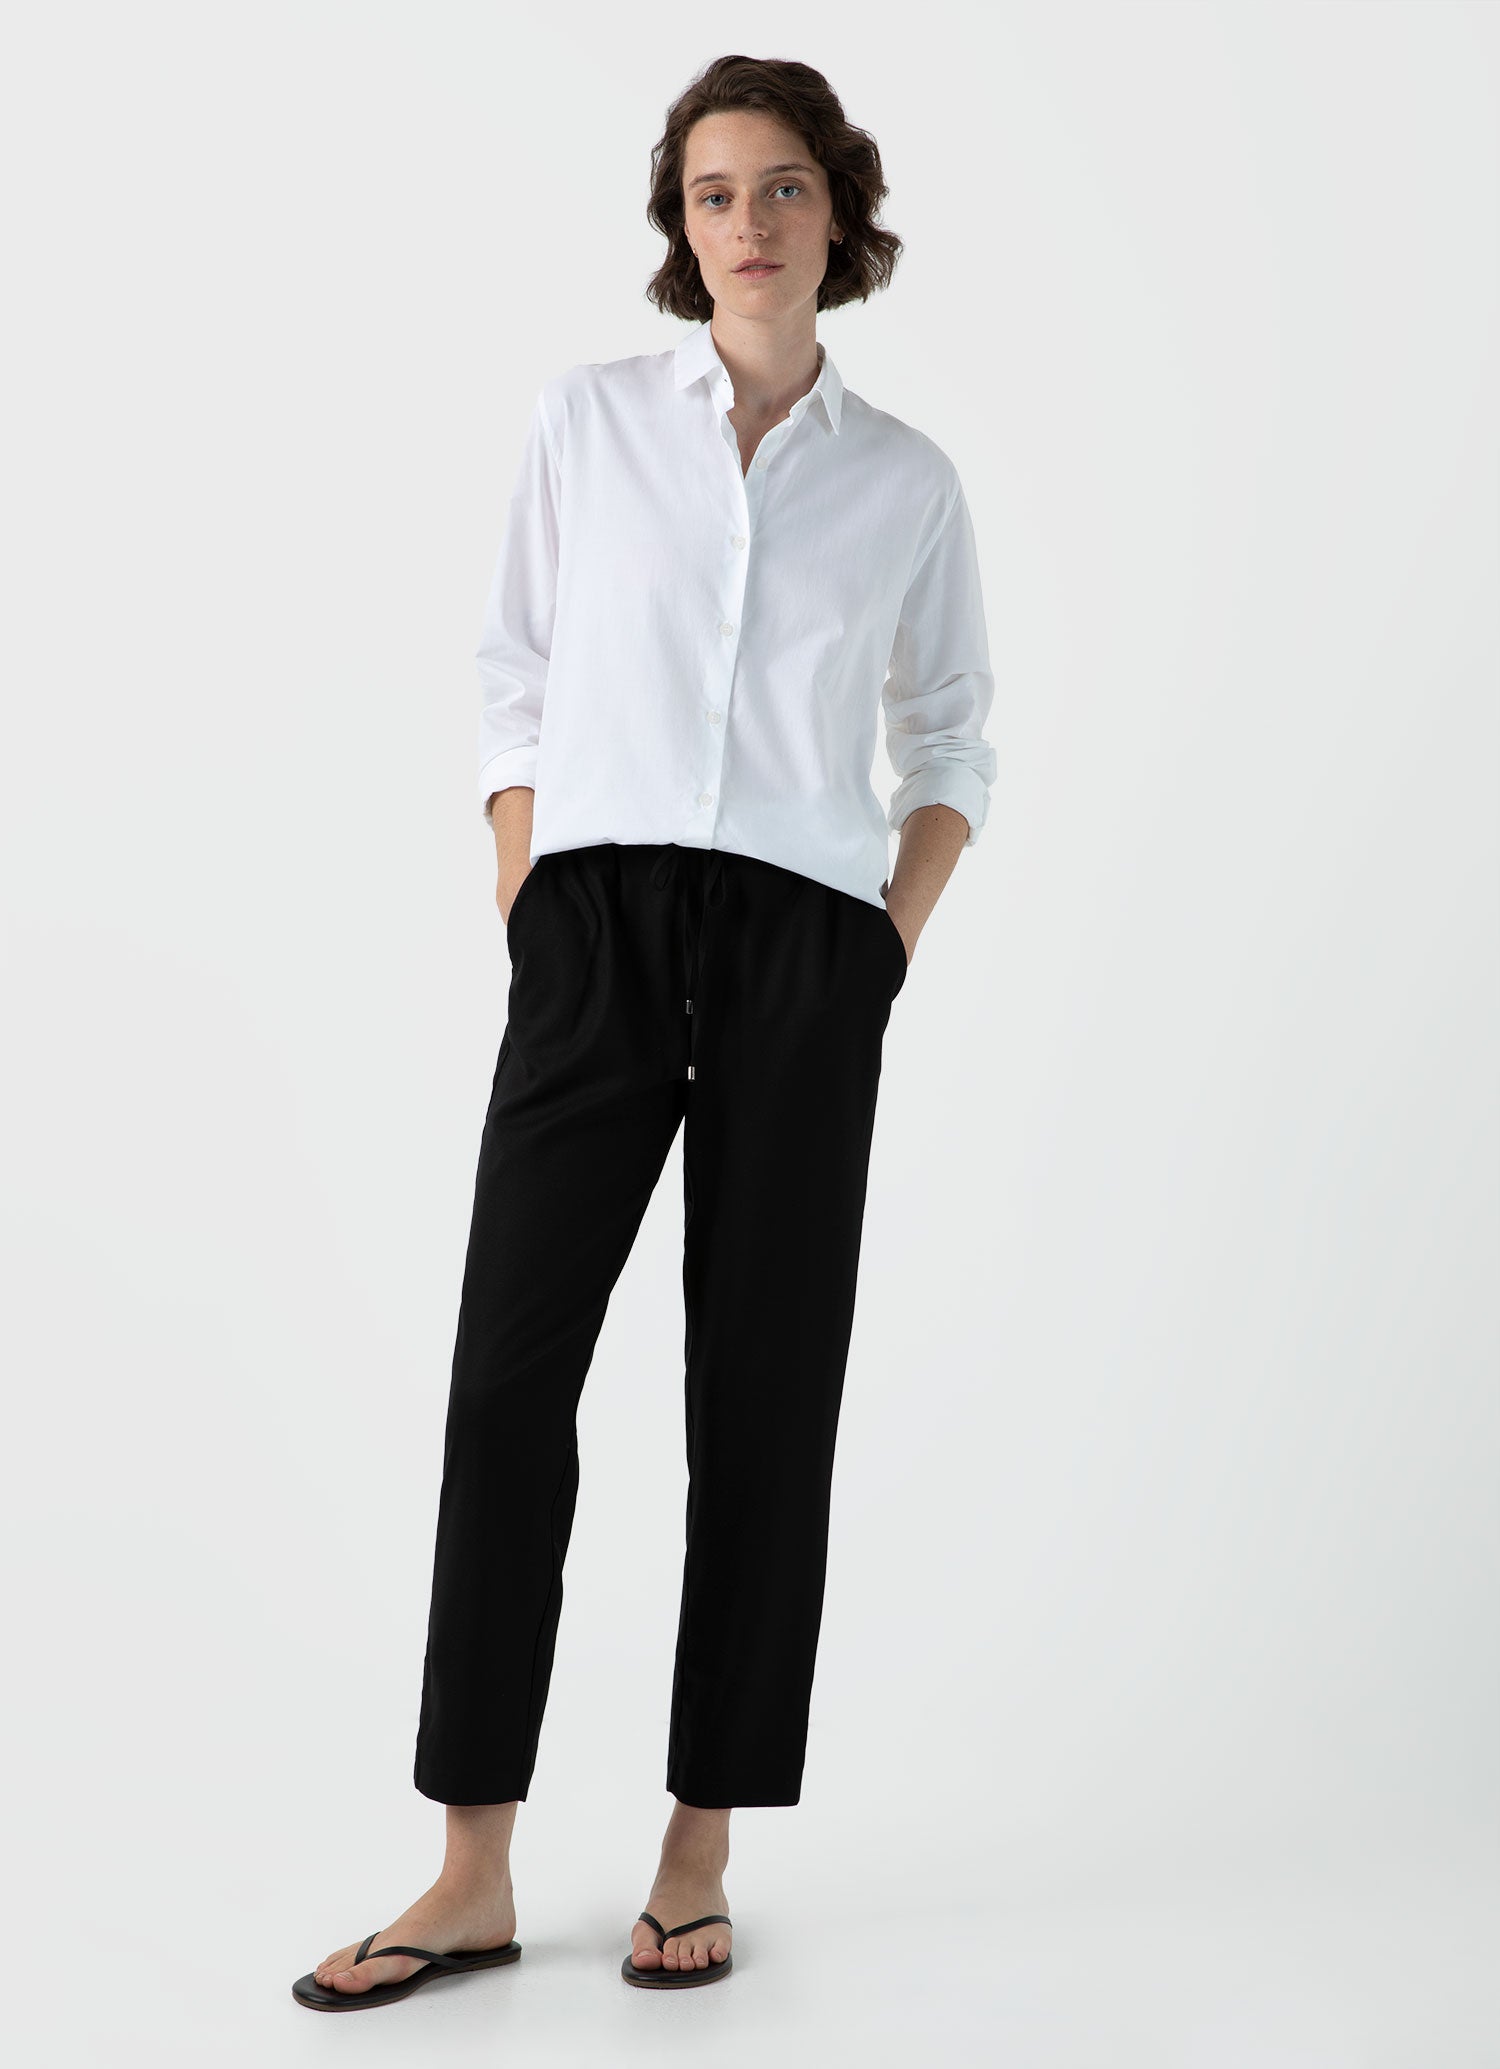 FLORAL AND STRIPED POPLIN CULOTTES | Linen pants women, Pants for women,  Fashion